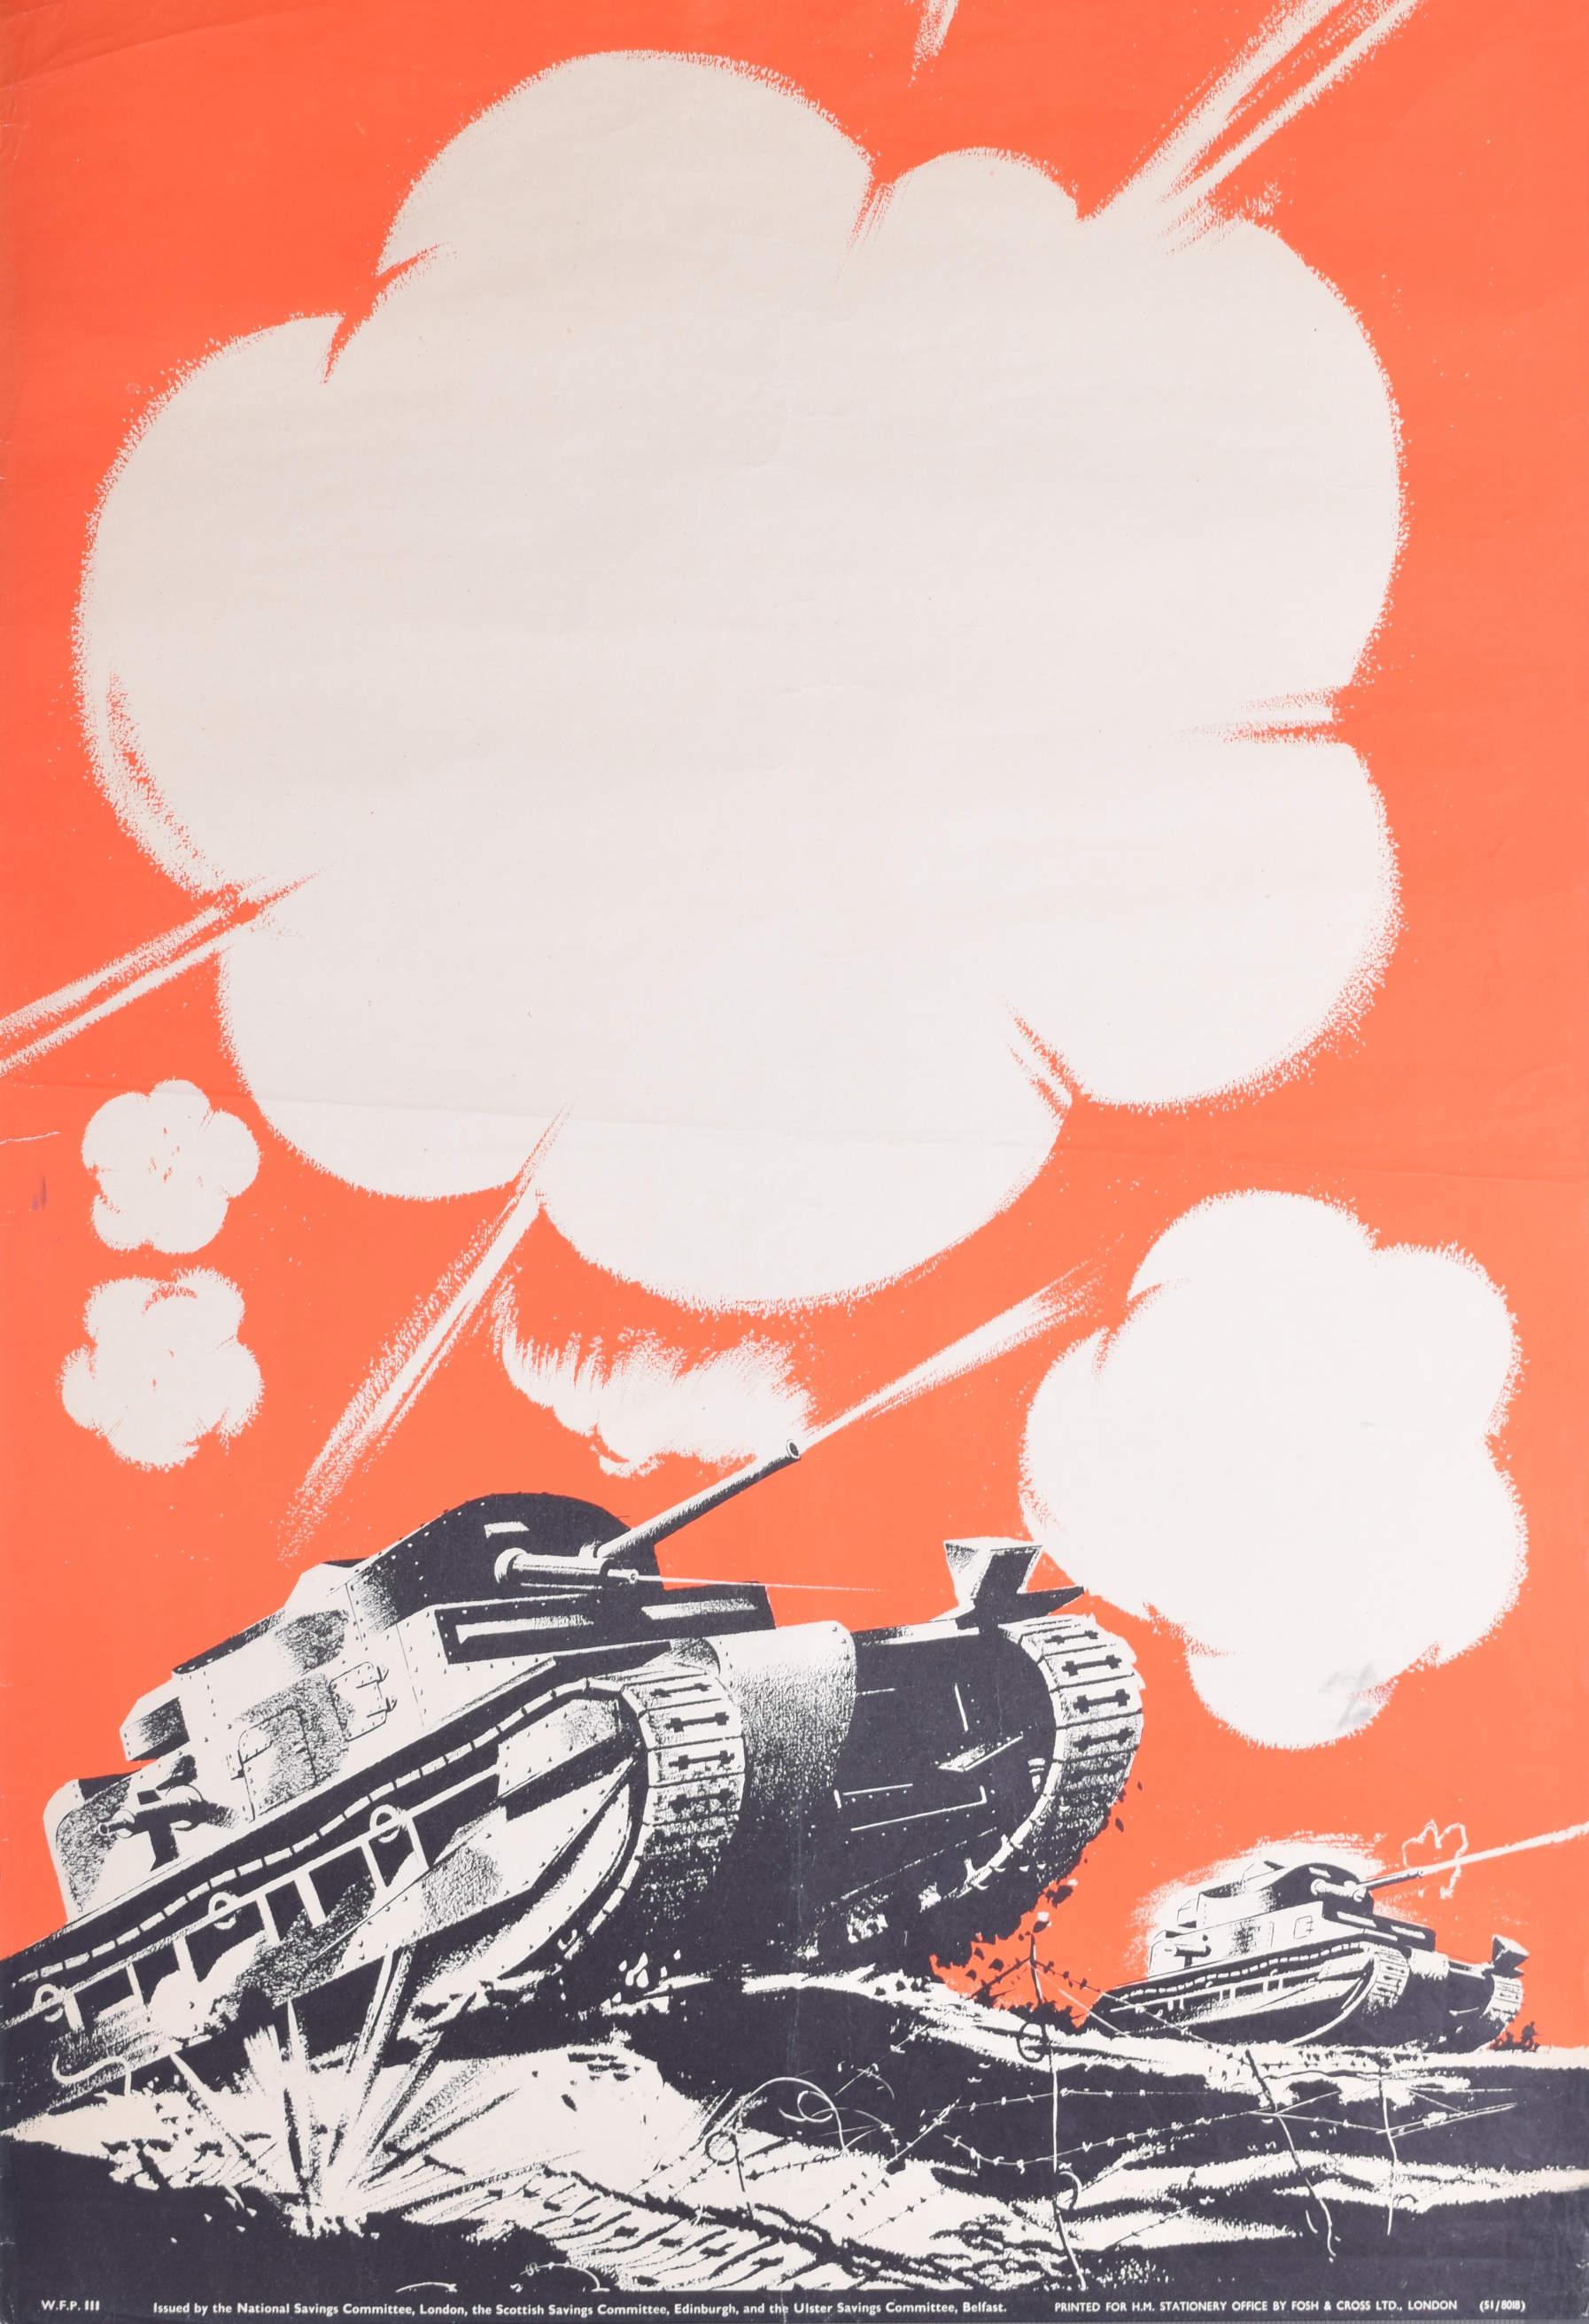 Unknown Print - WW2 Tanks original vintage poster for National Savings 